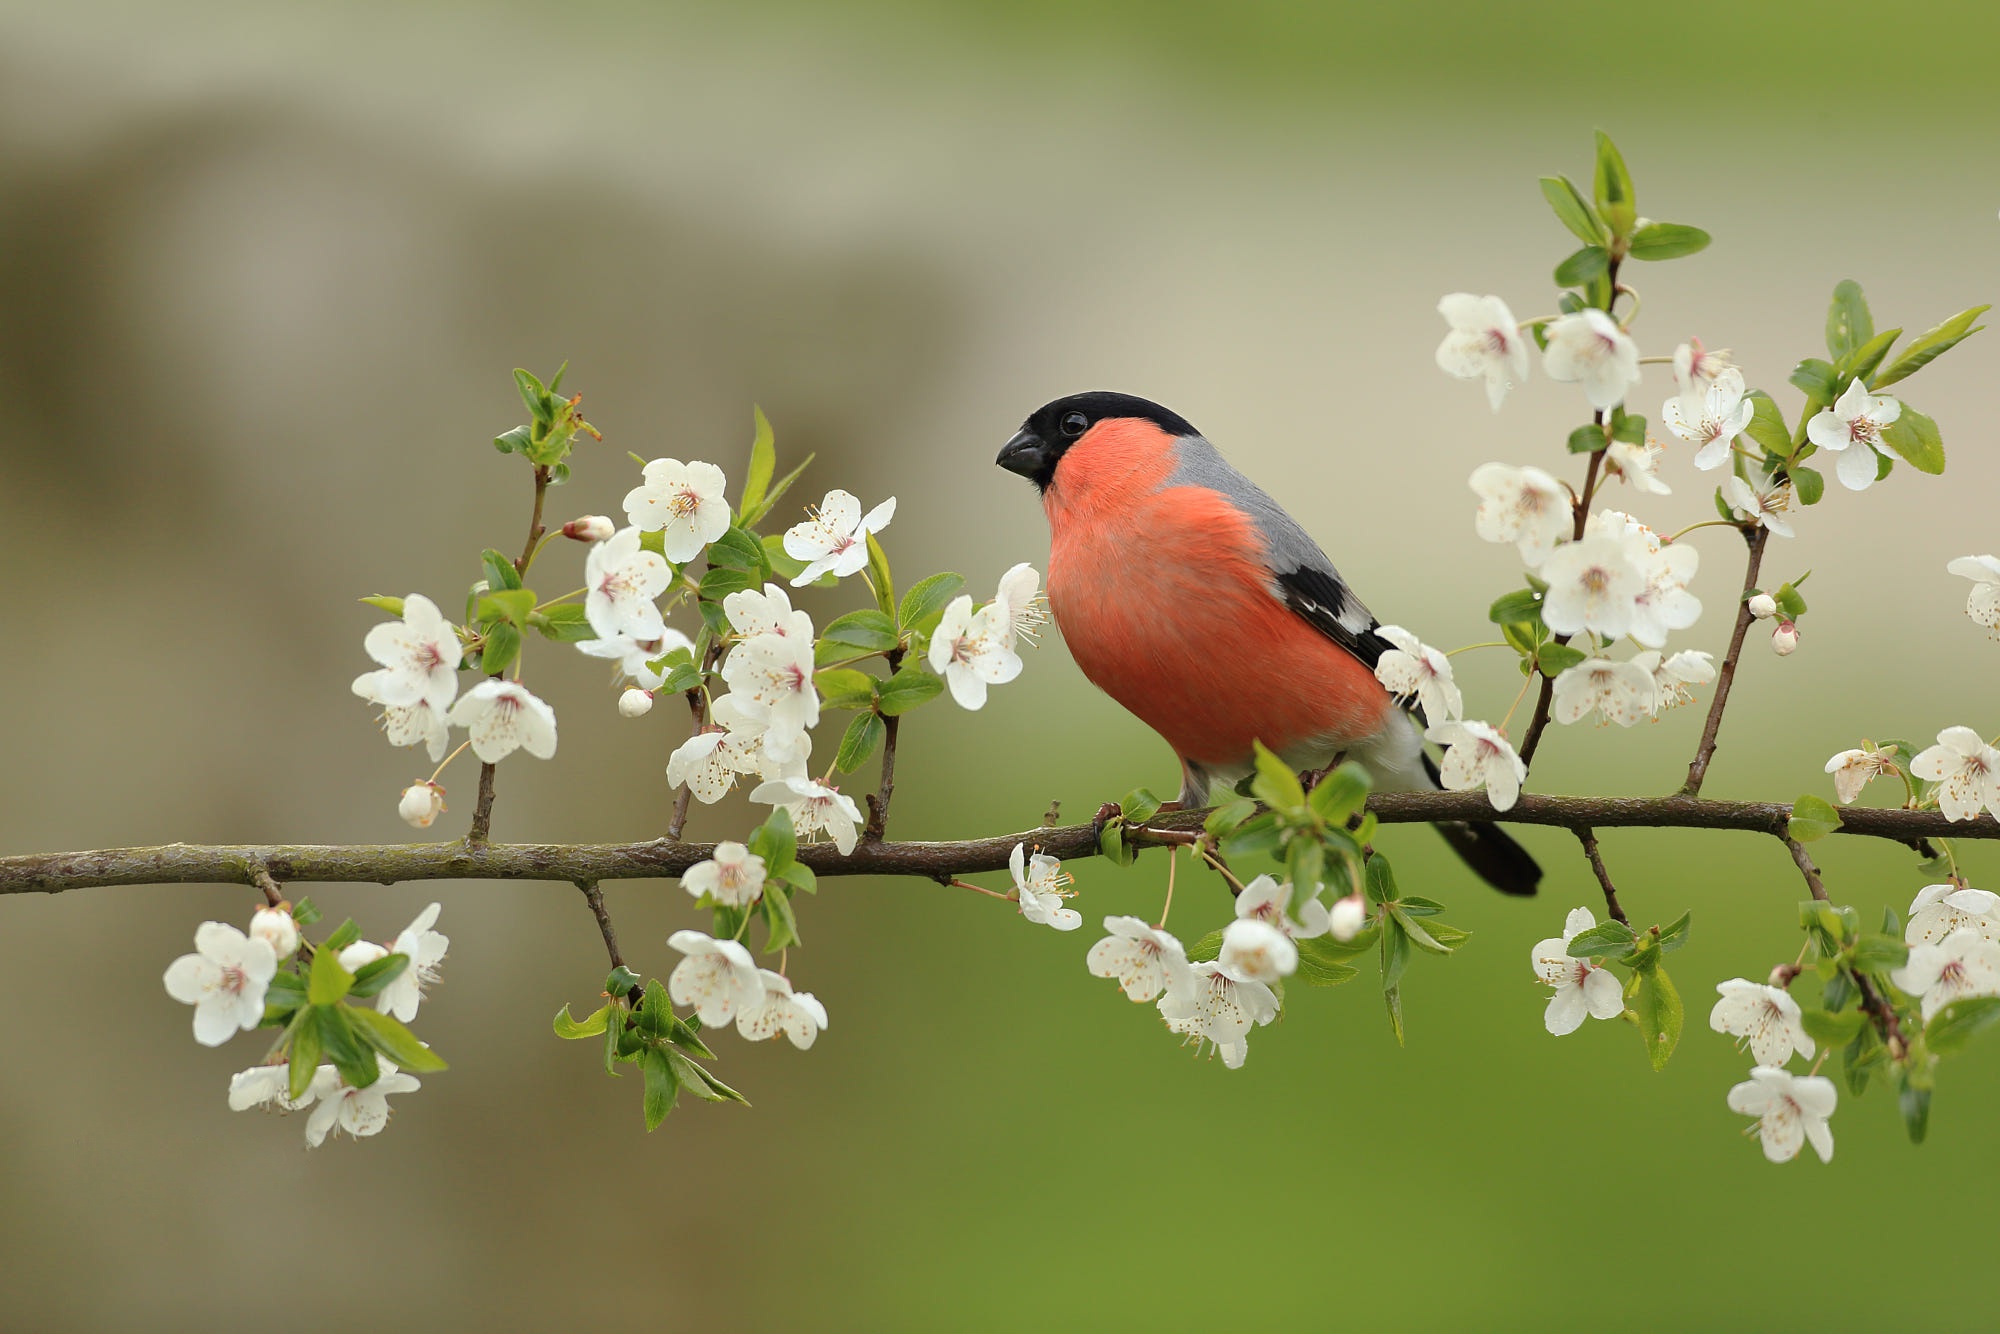 469557 descargar imagen animales, piñonero, ave, florecer, flor, aves: fondos de pantalla y protectores de pantalla gratis